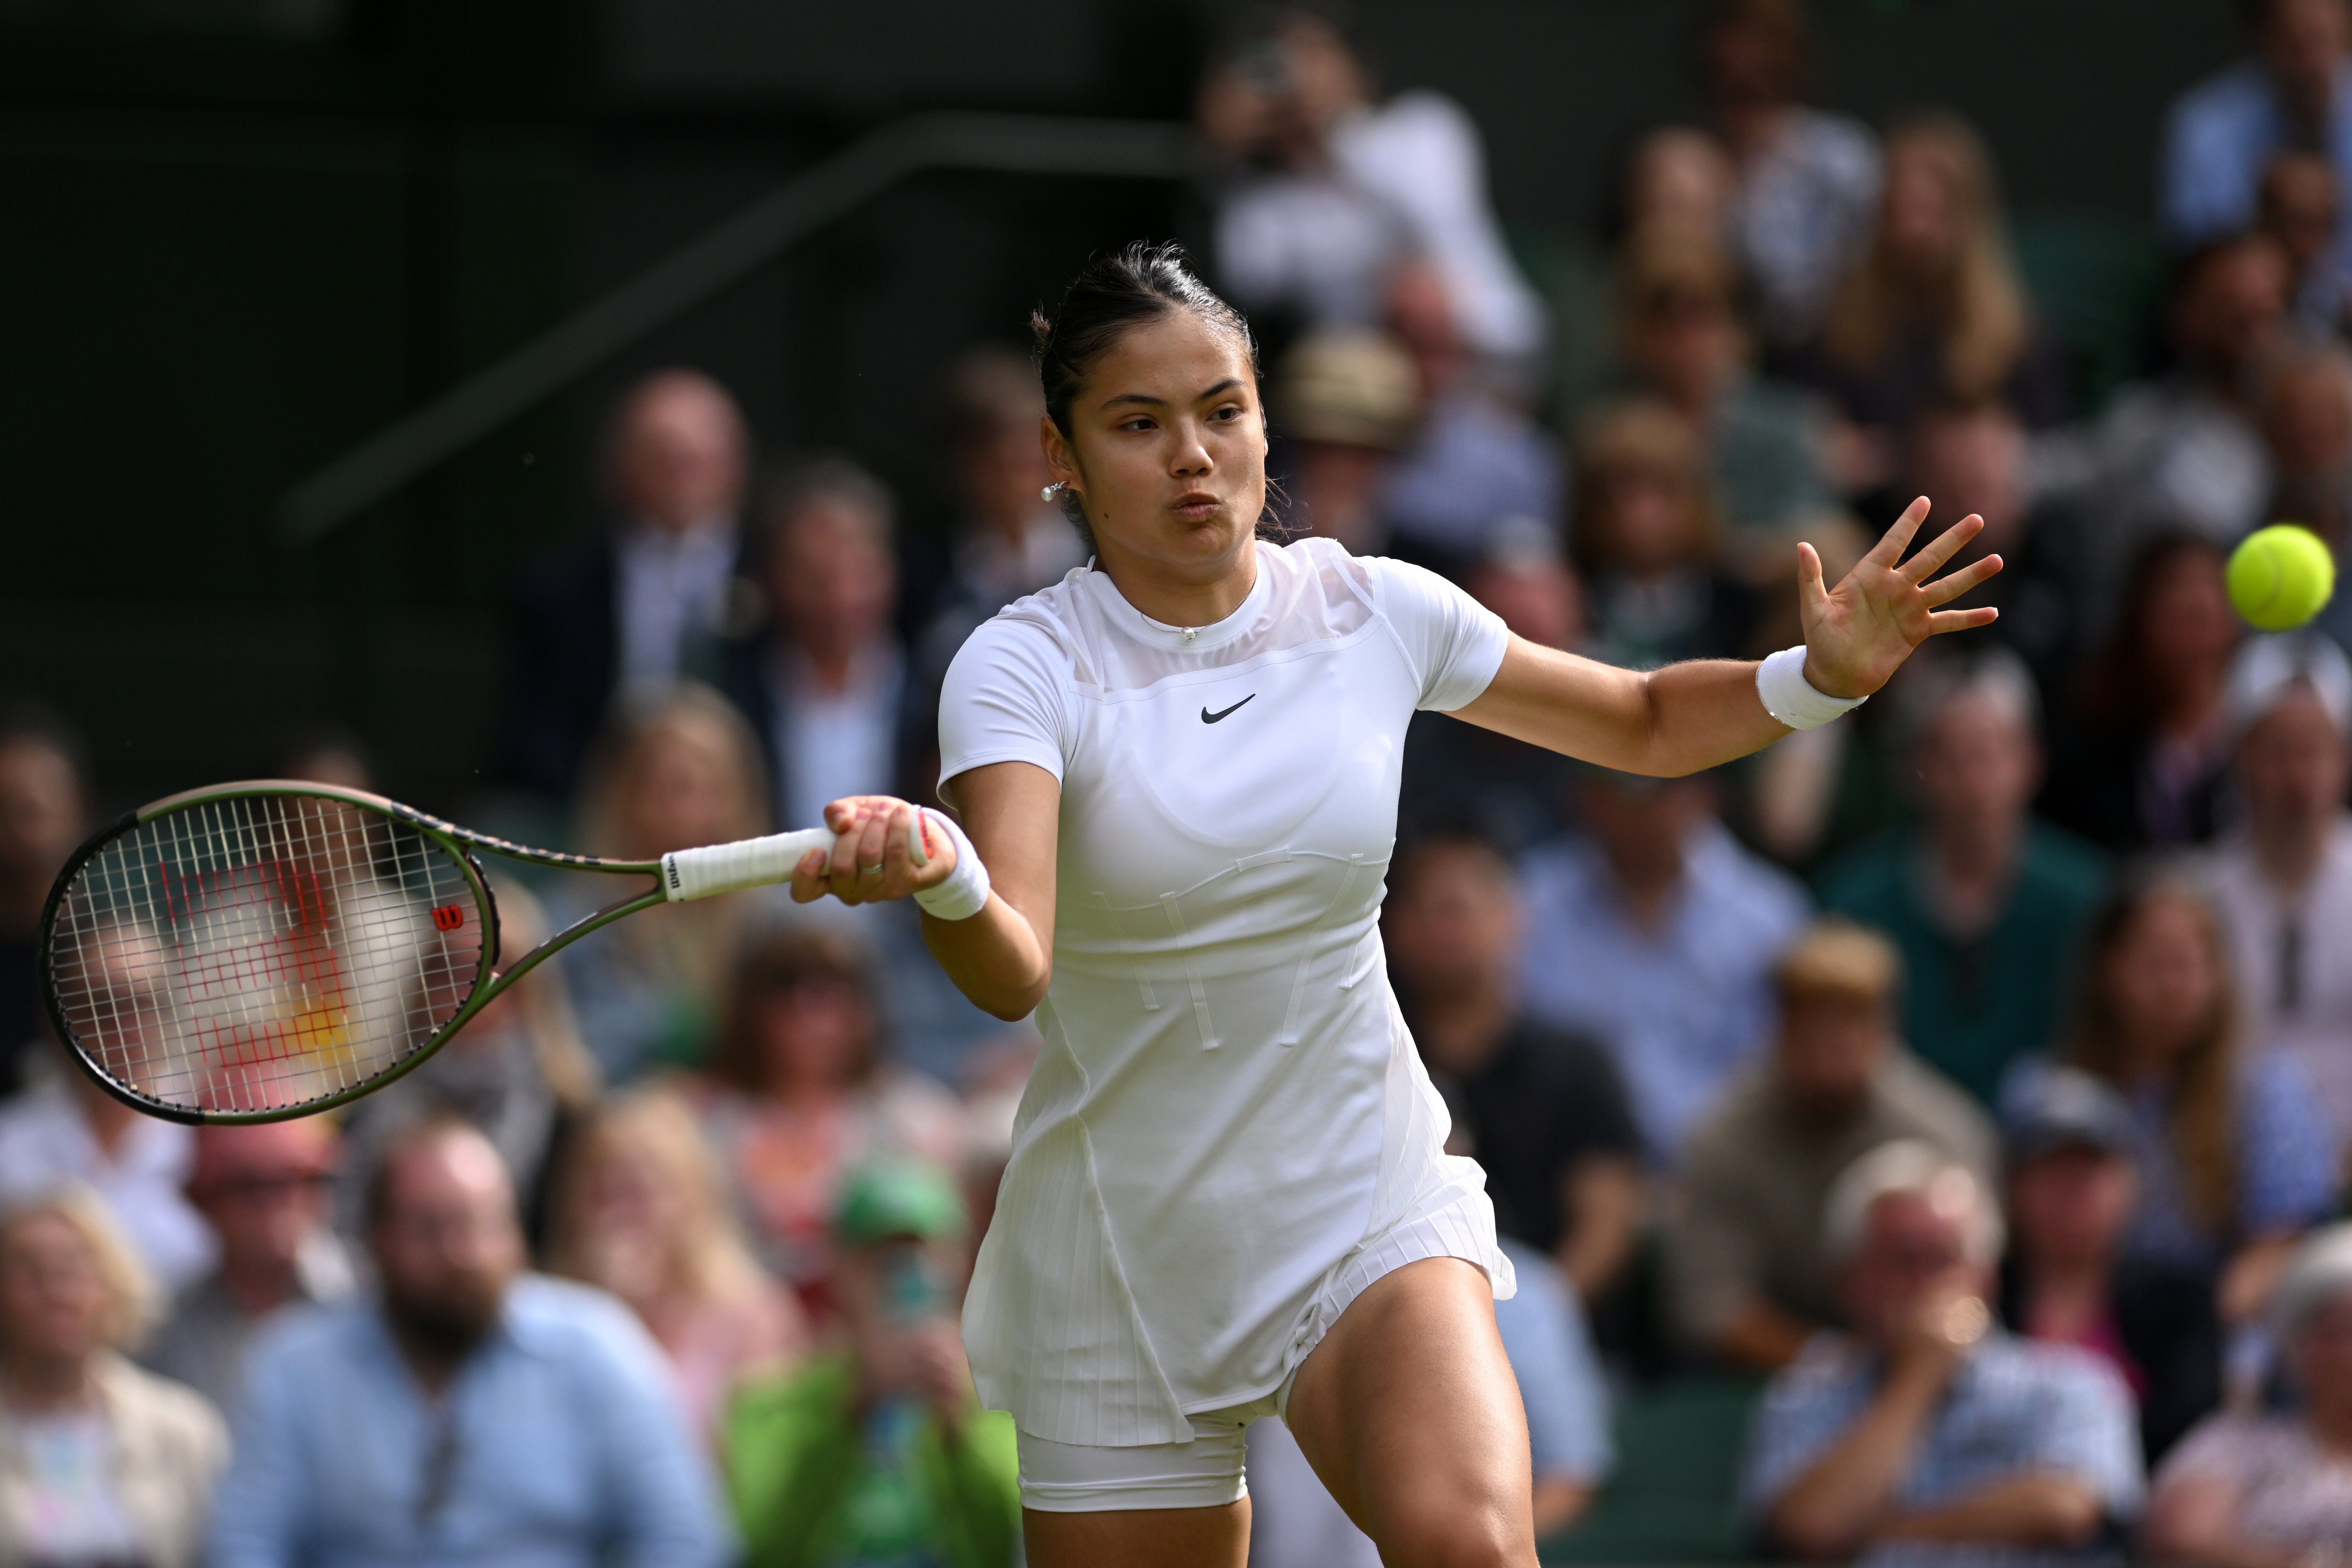 Emma Raducanu is gearing up for Wimbledon